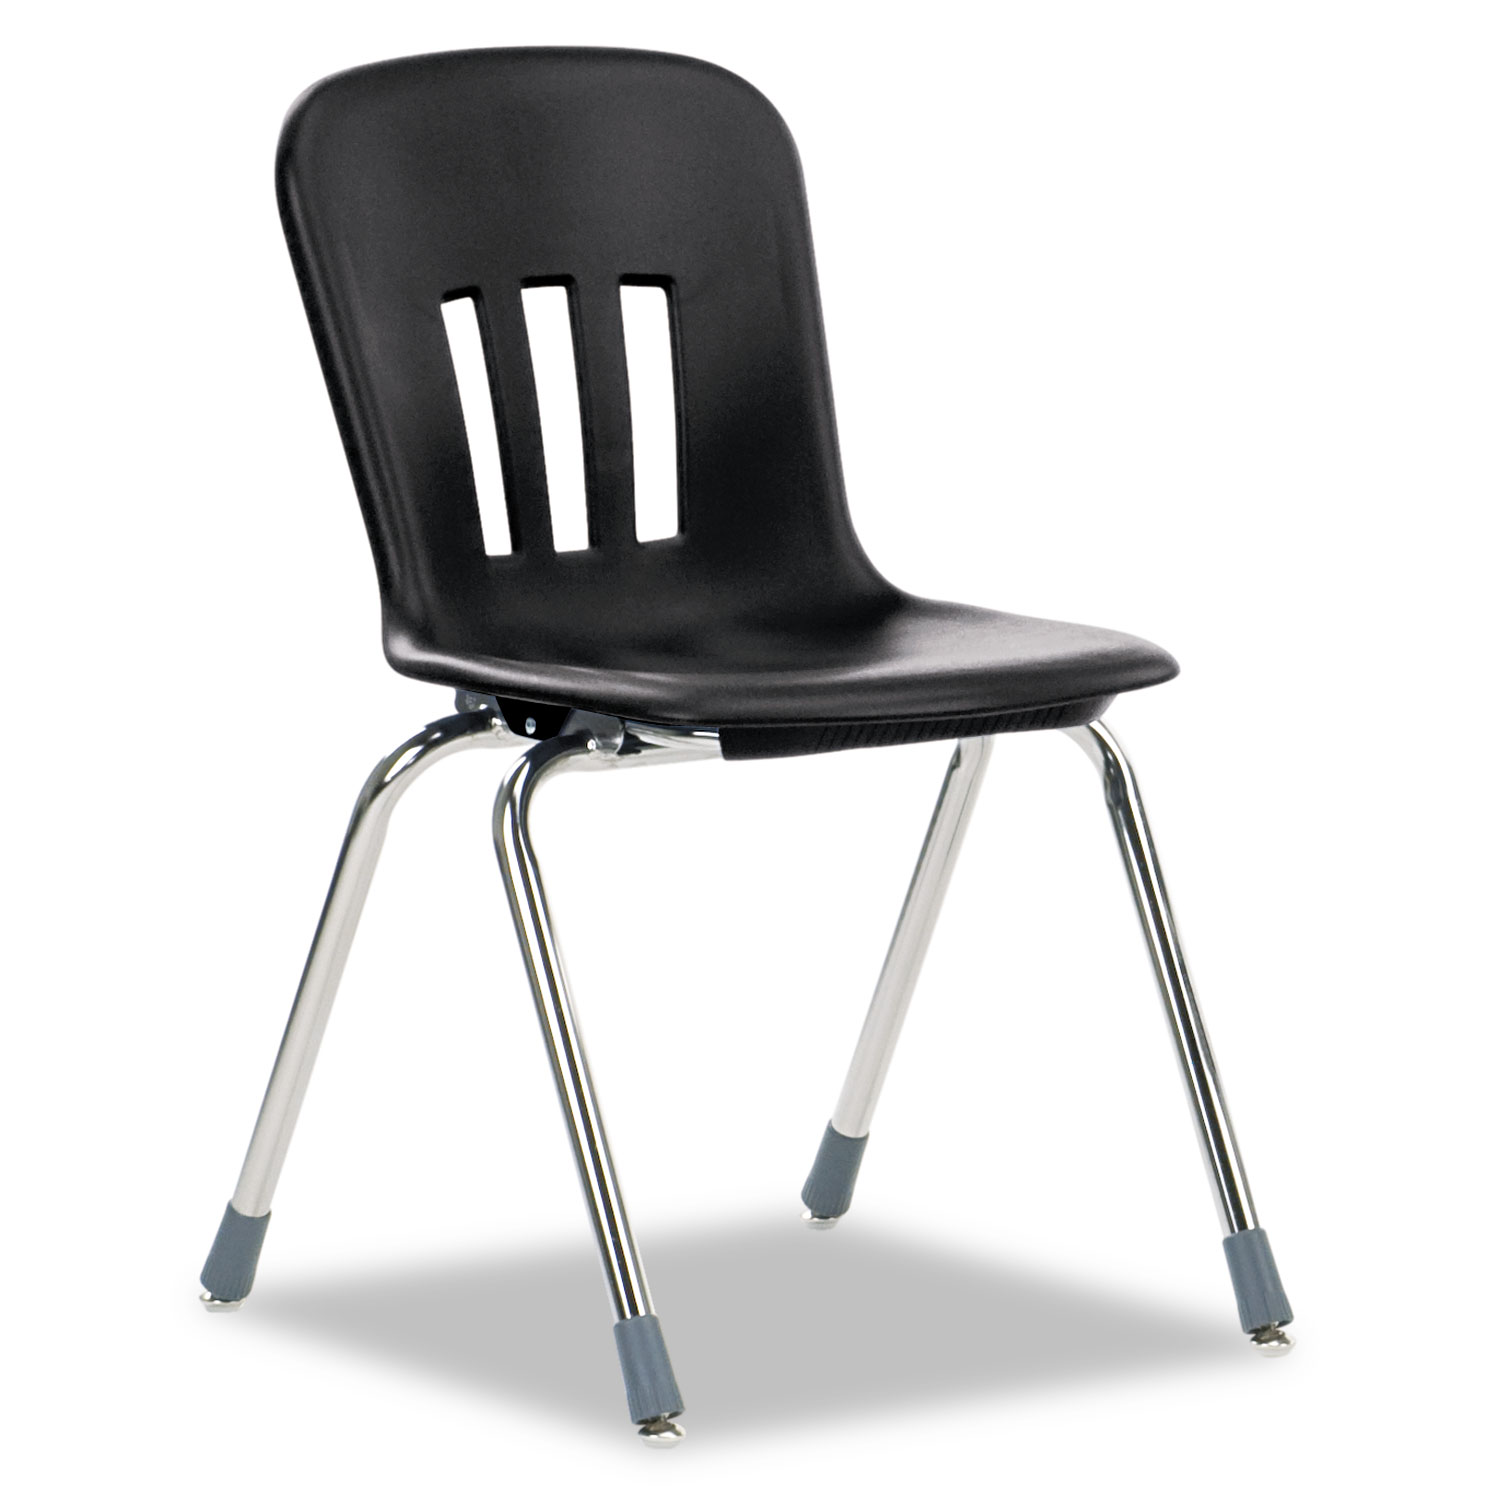 Metaphor Series Classroom Chair, 18 Seat Height, Black/Chrome, 4/Carton